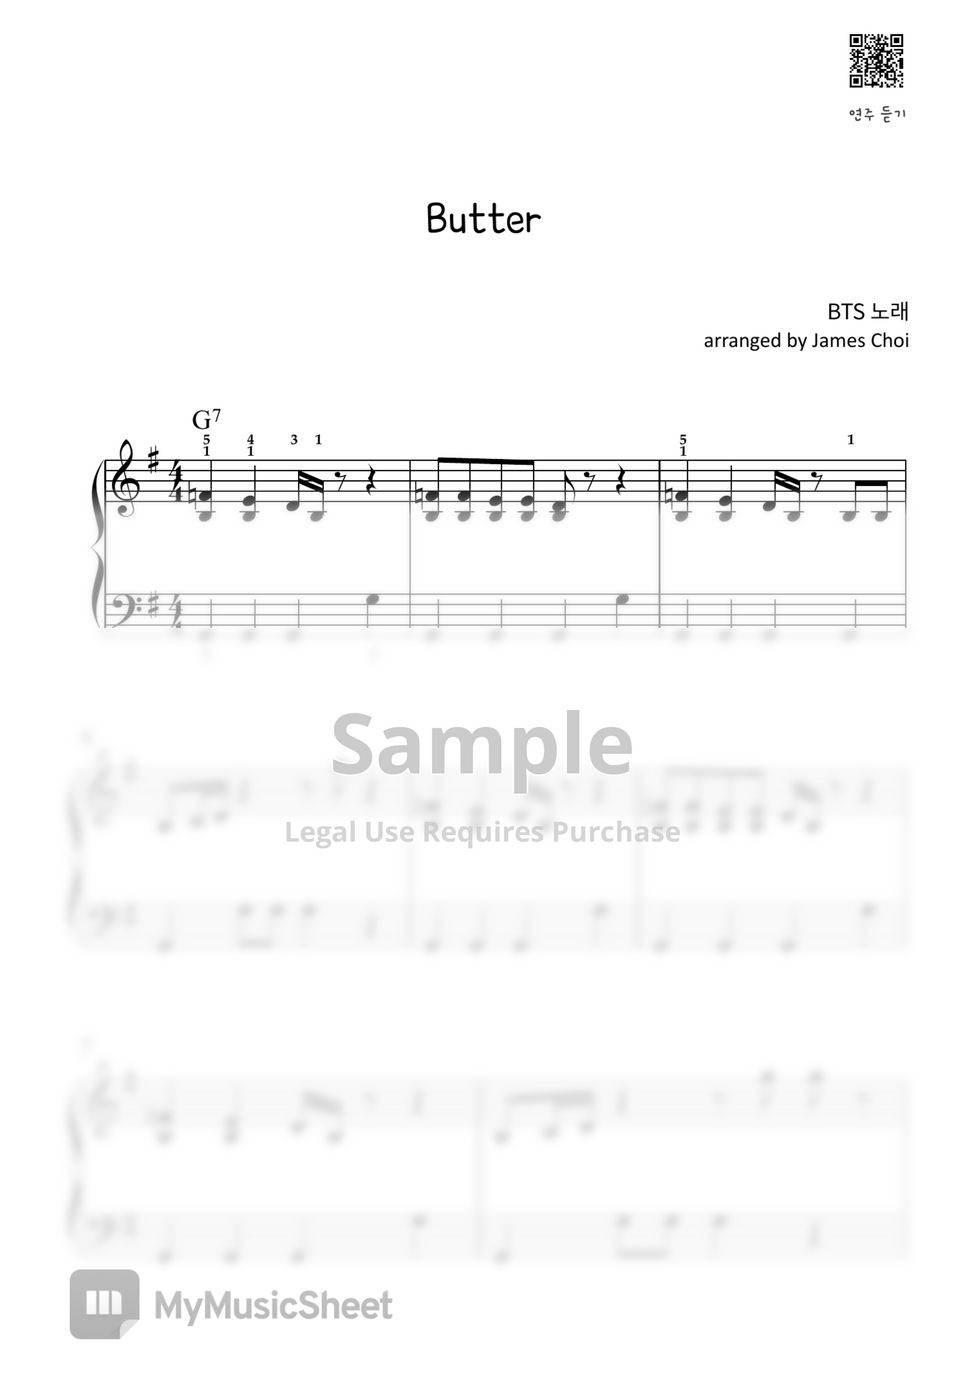 BTS - Butter (easy, G key) by JC